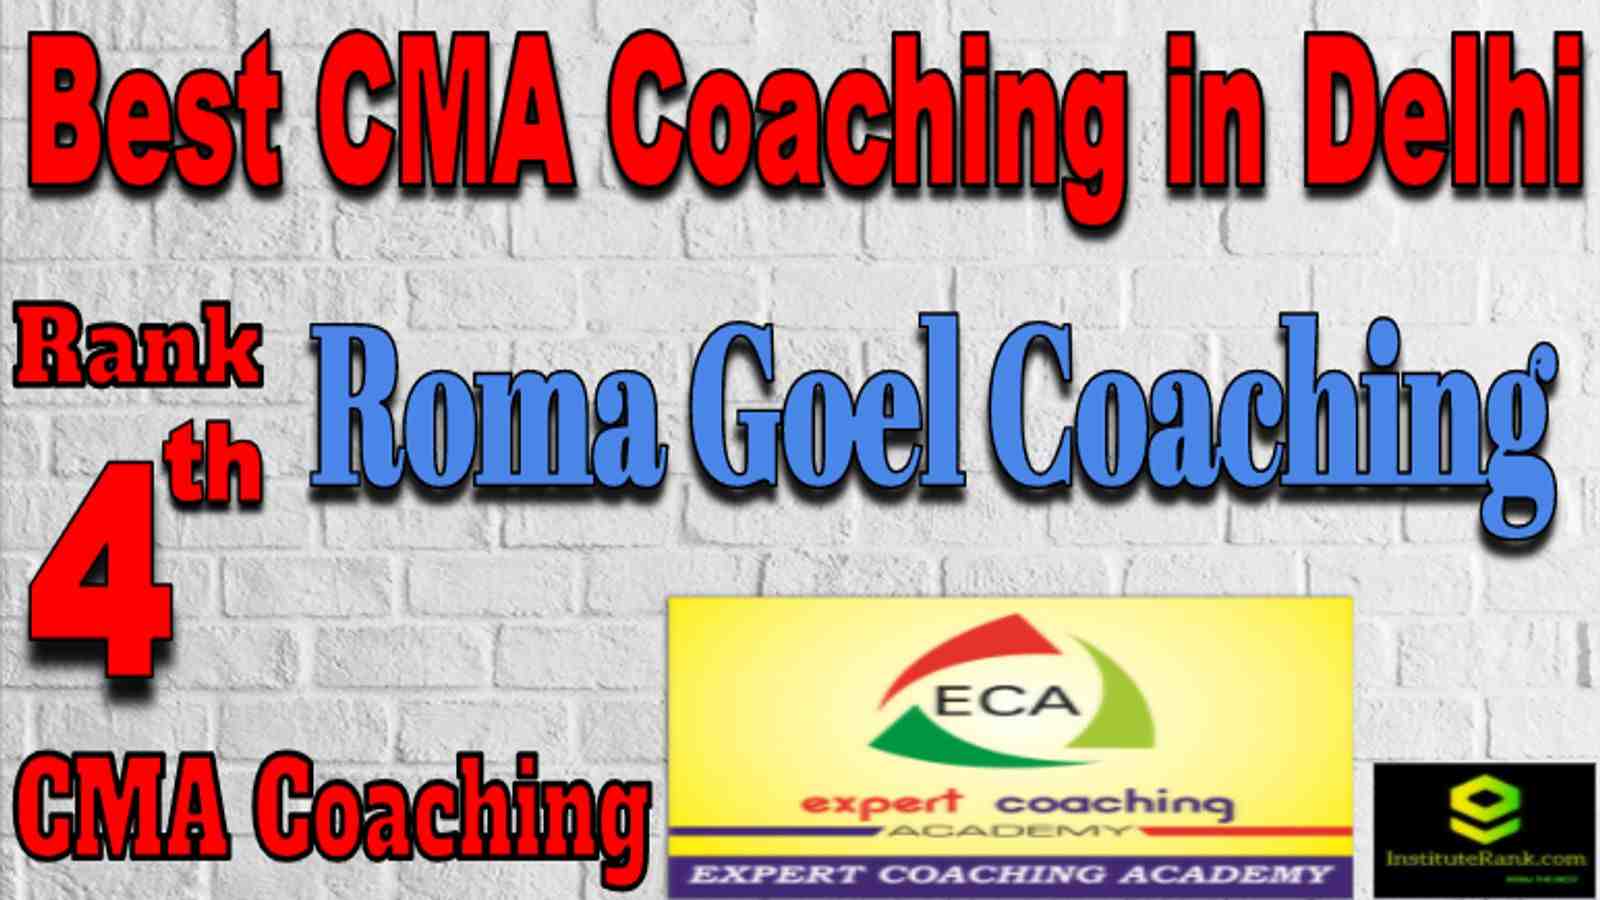 Rank 4 Best CMA Coaching in Delhi